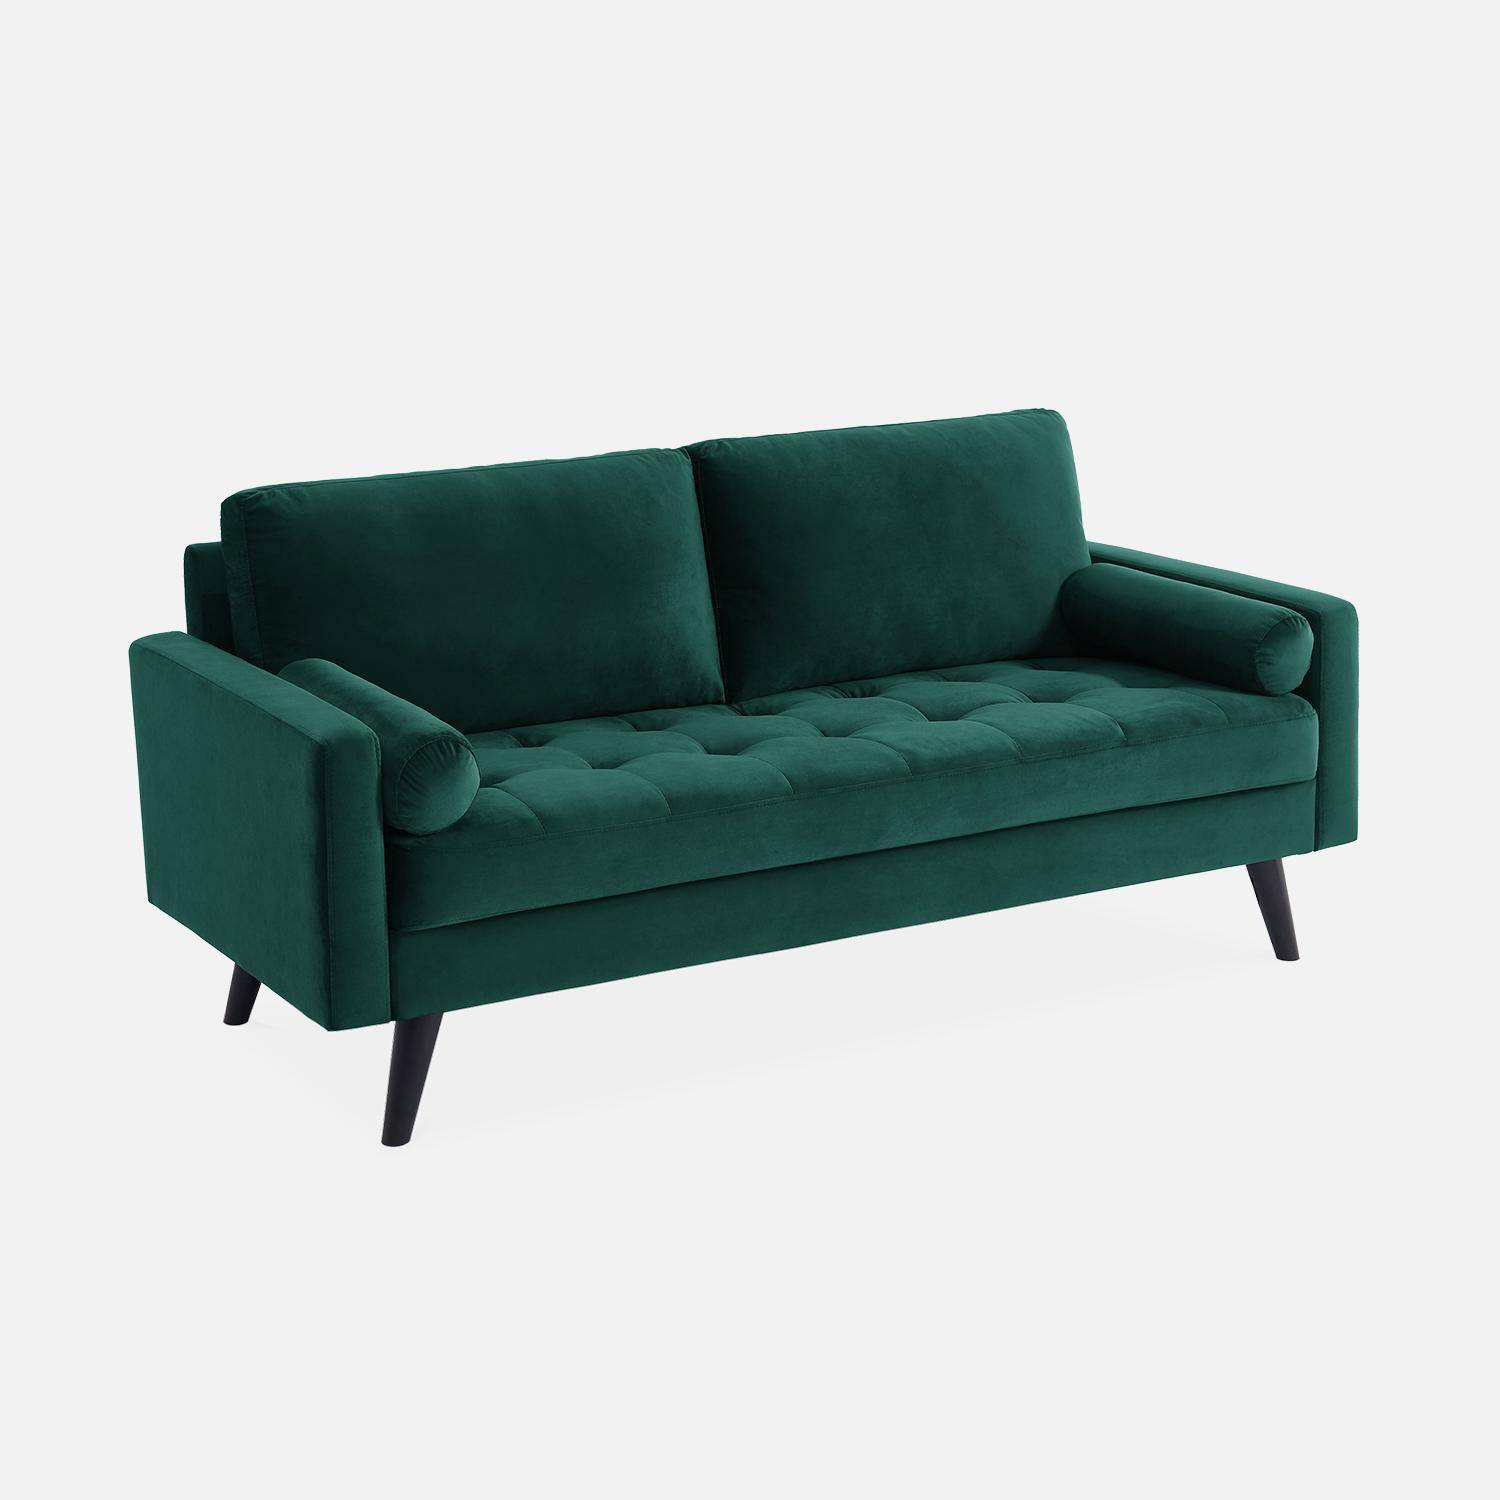 Velvet vintage style 3-seater sofa with Scandi style wooden legs - Ivar - Green,sweeek,Photo2